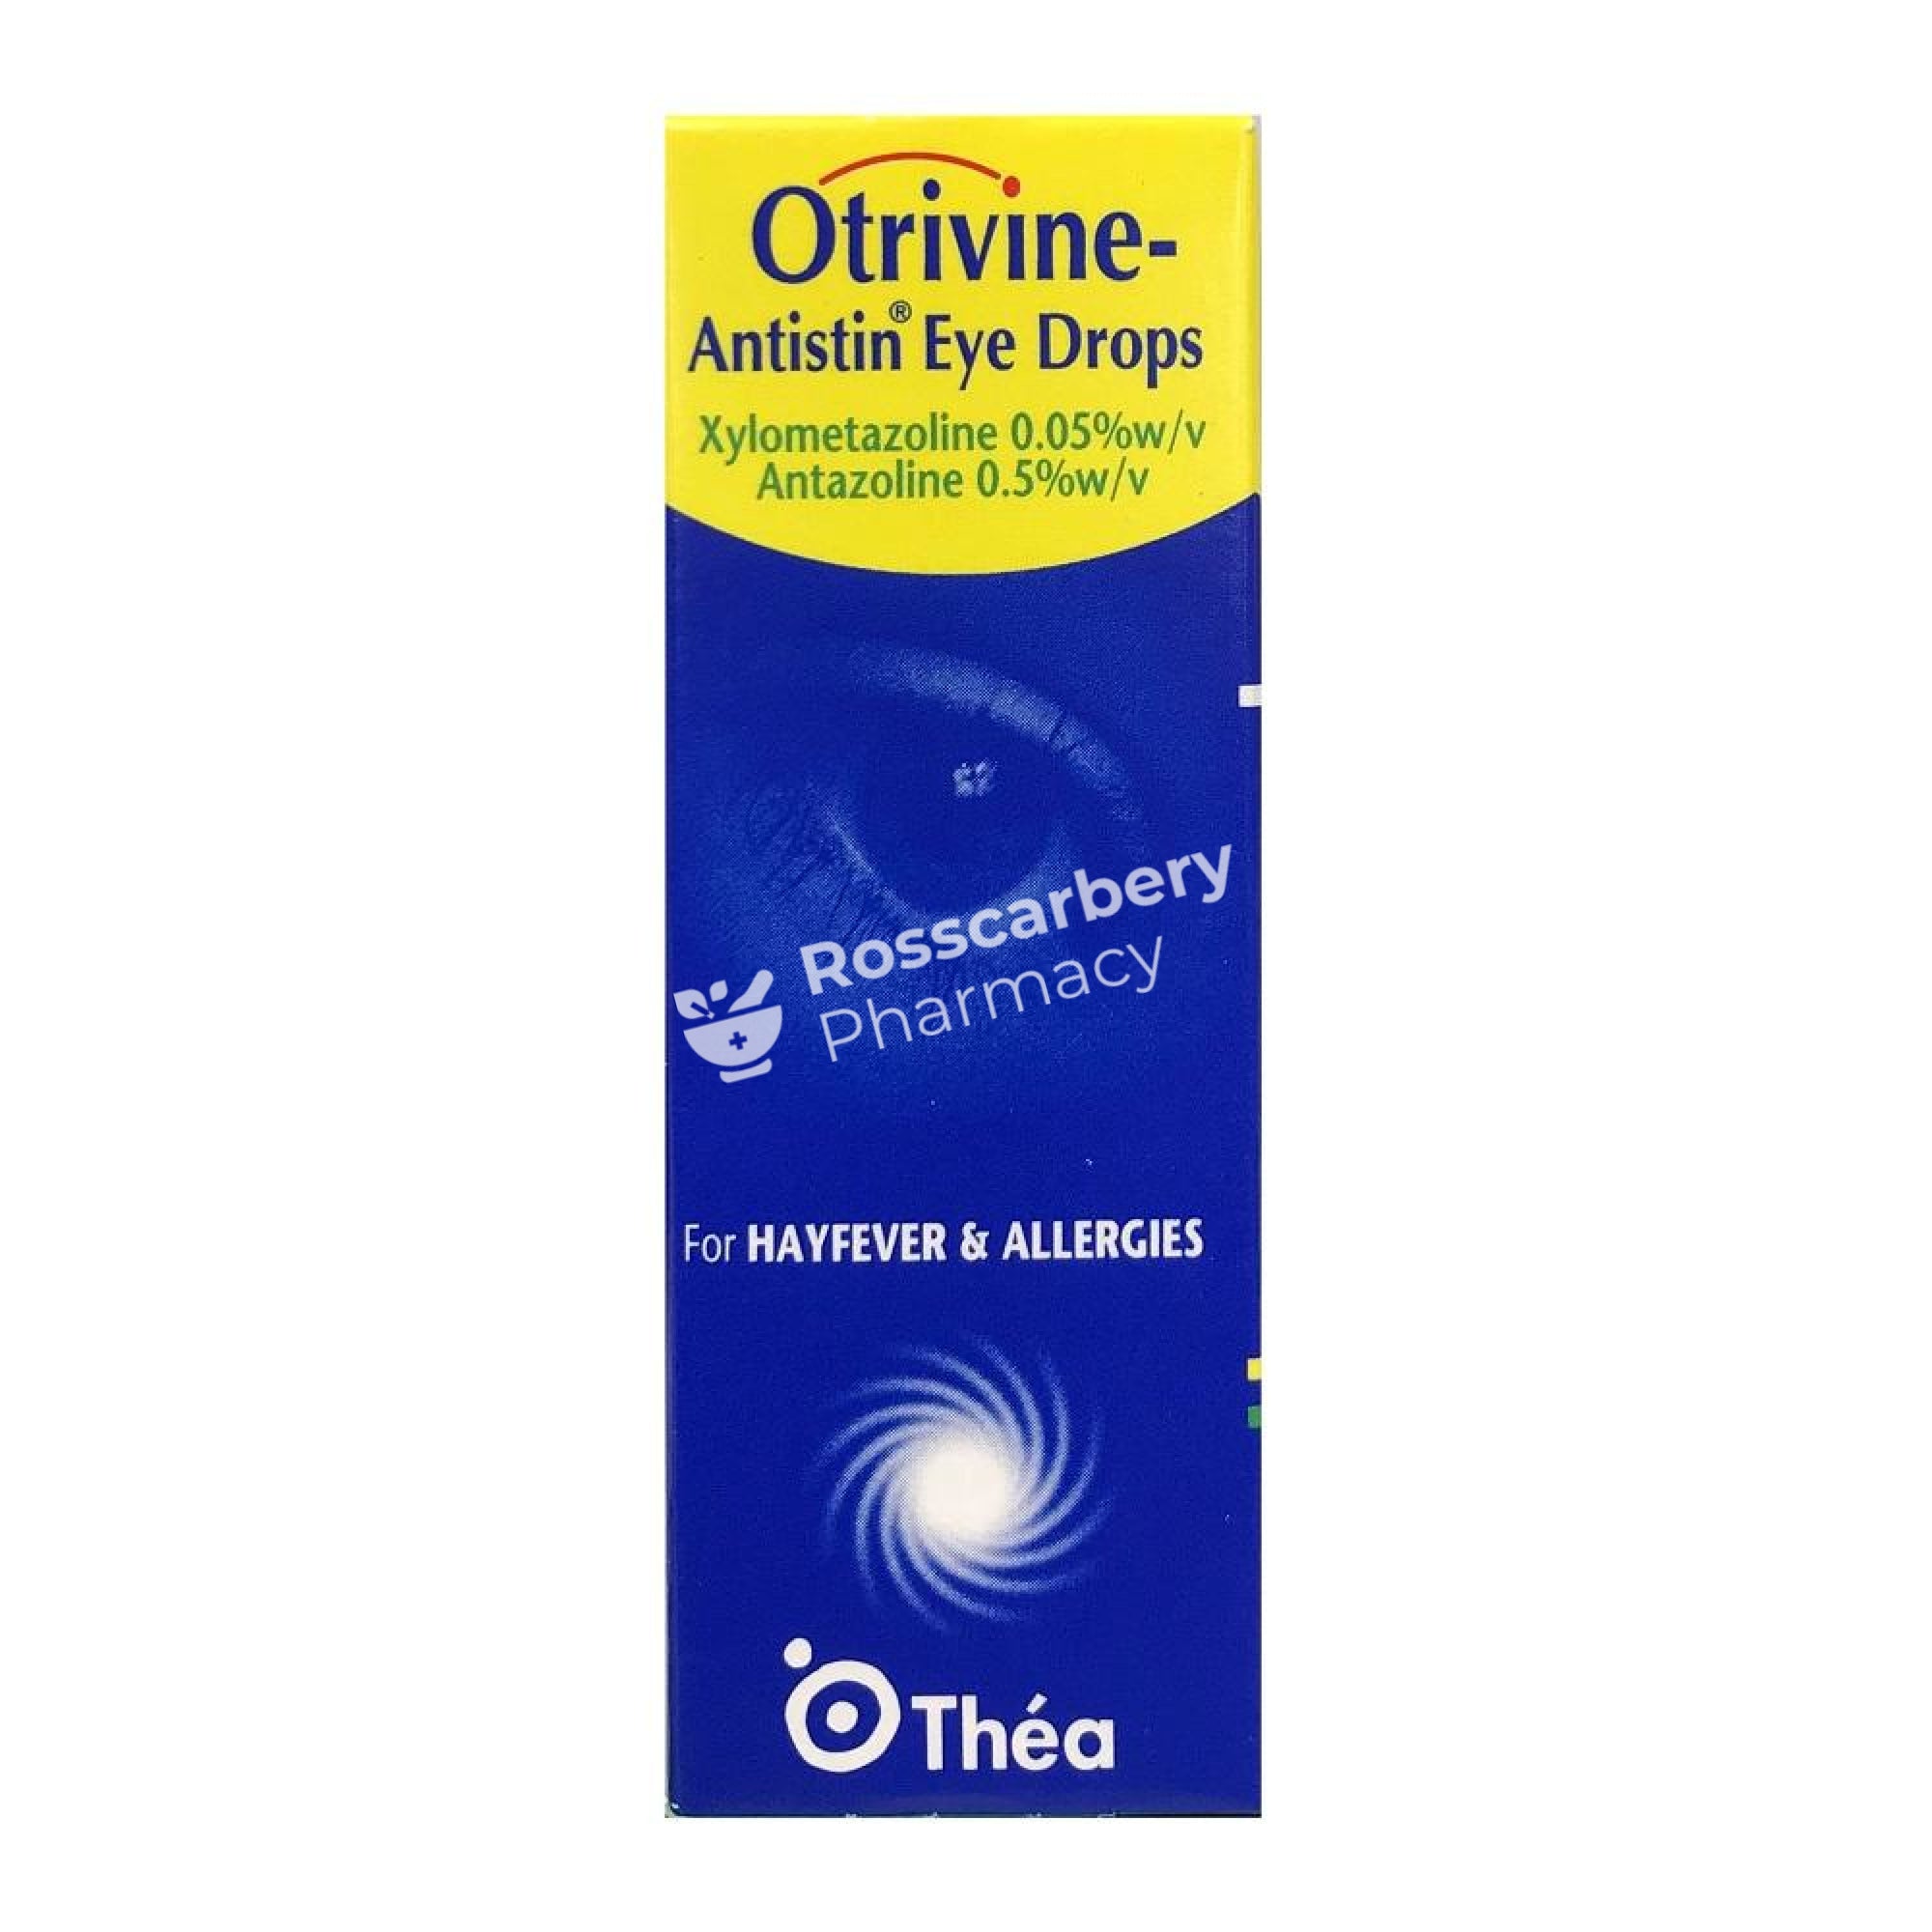 Otrivine Antistin Eye Drops